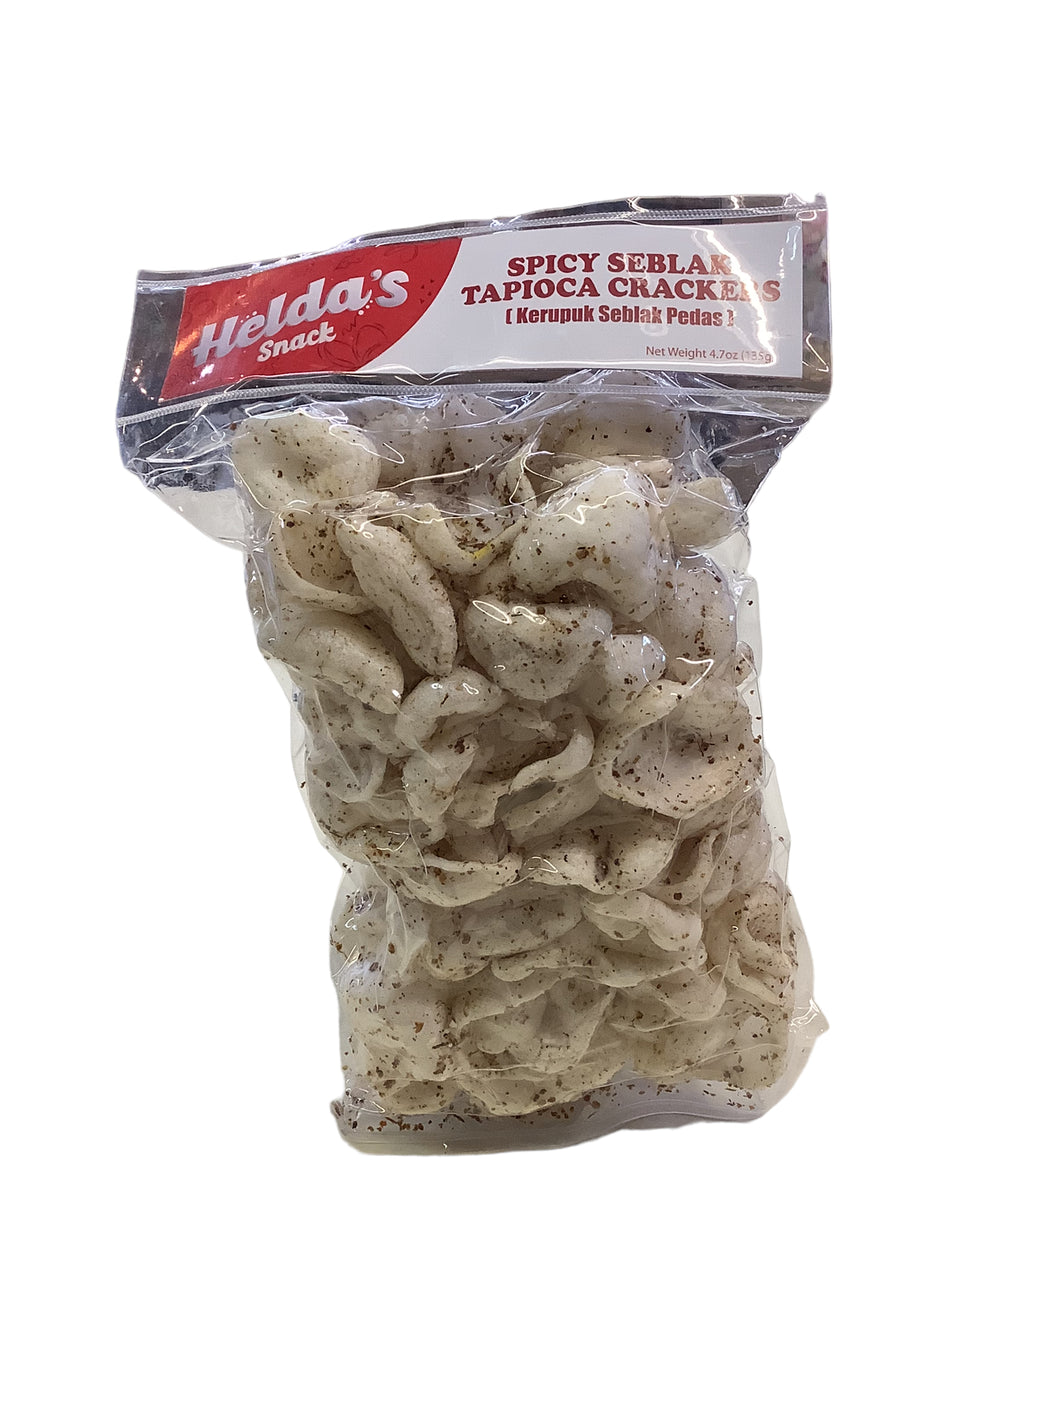 Helda's Spicy Seblak Tapioca Crackers